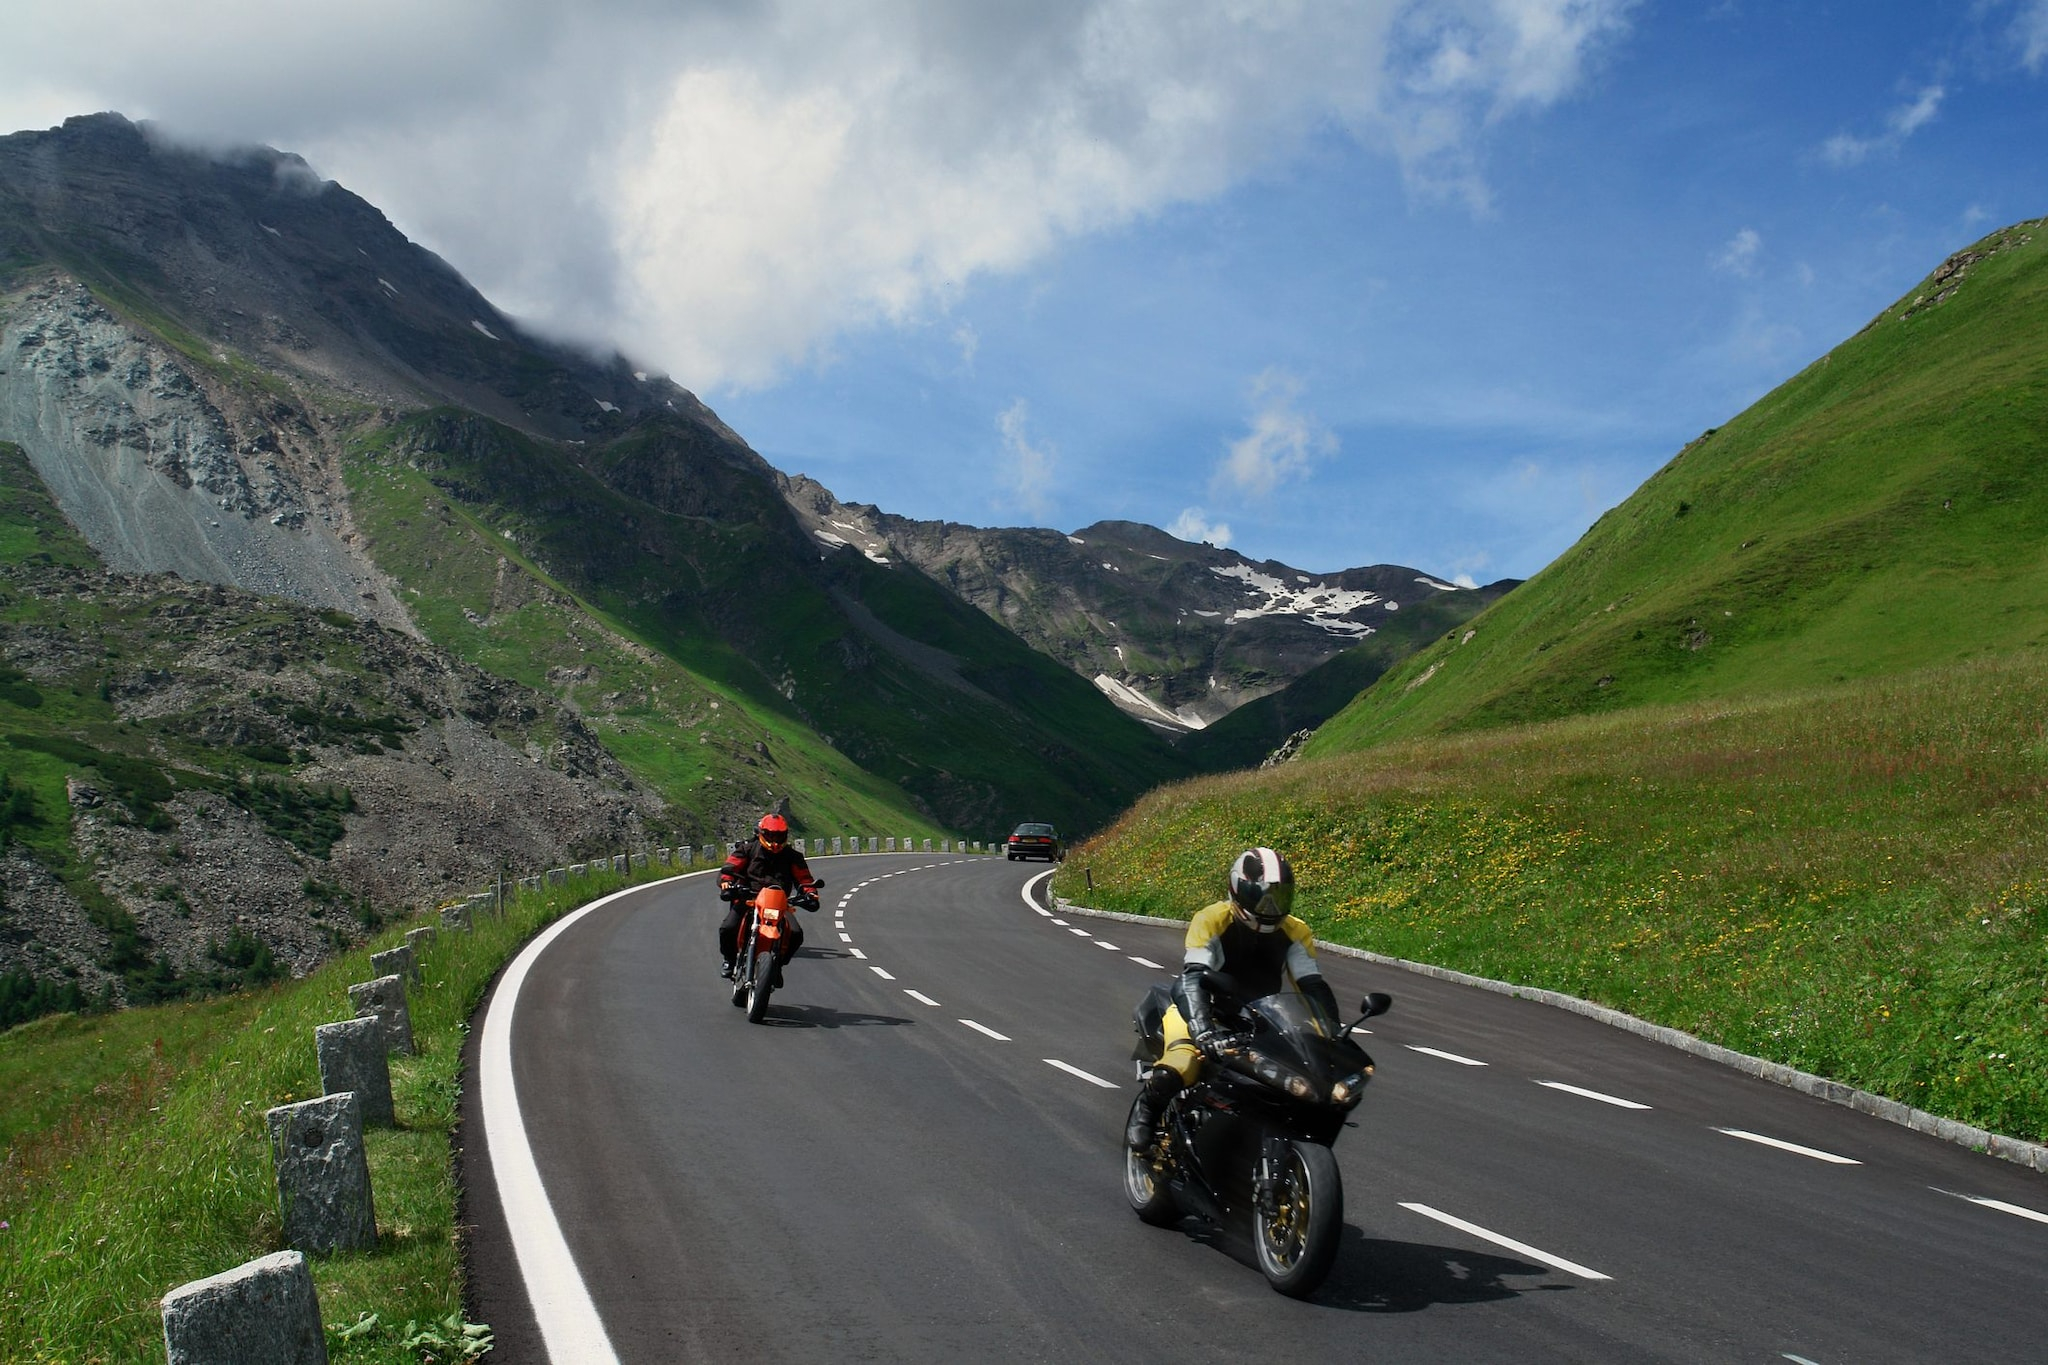 Мотоцикл едет по дороге. Мотоцикл на дороге. Байкер на дороге. Мотоцикл для путешествий. Дорога горы мотоцикл.